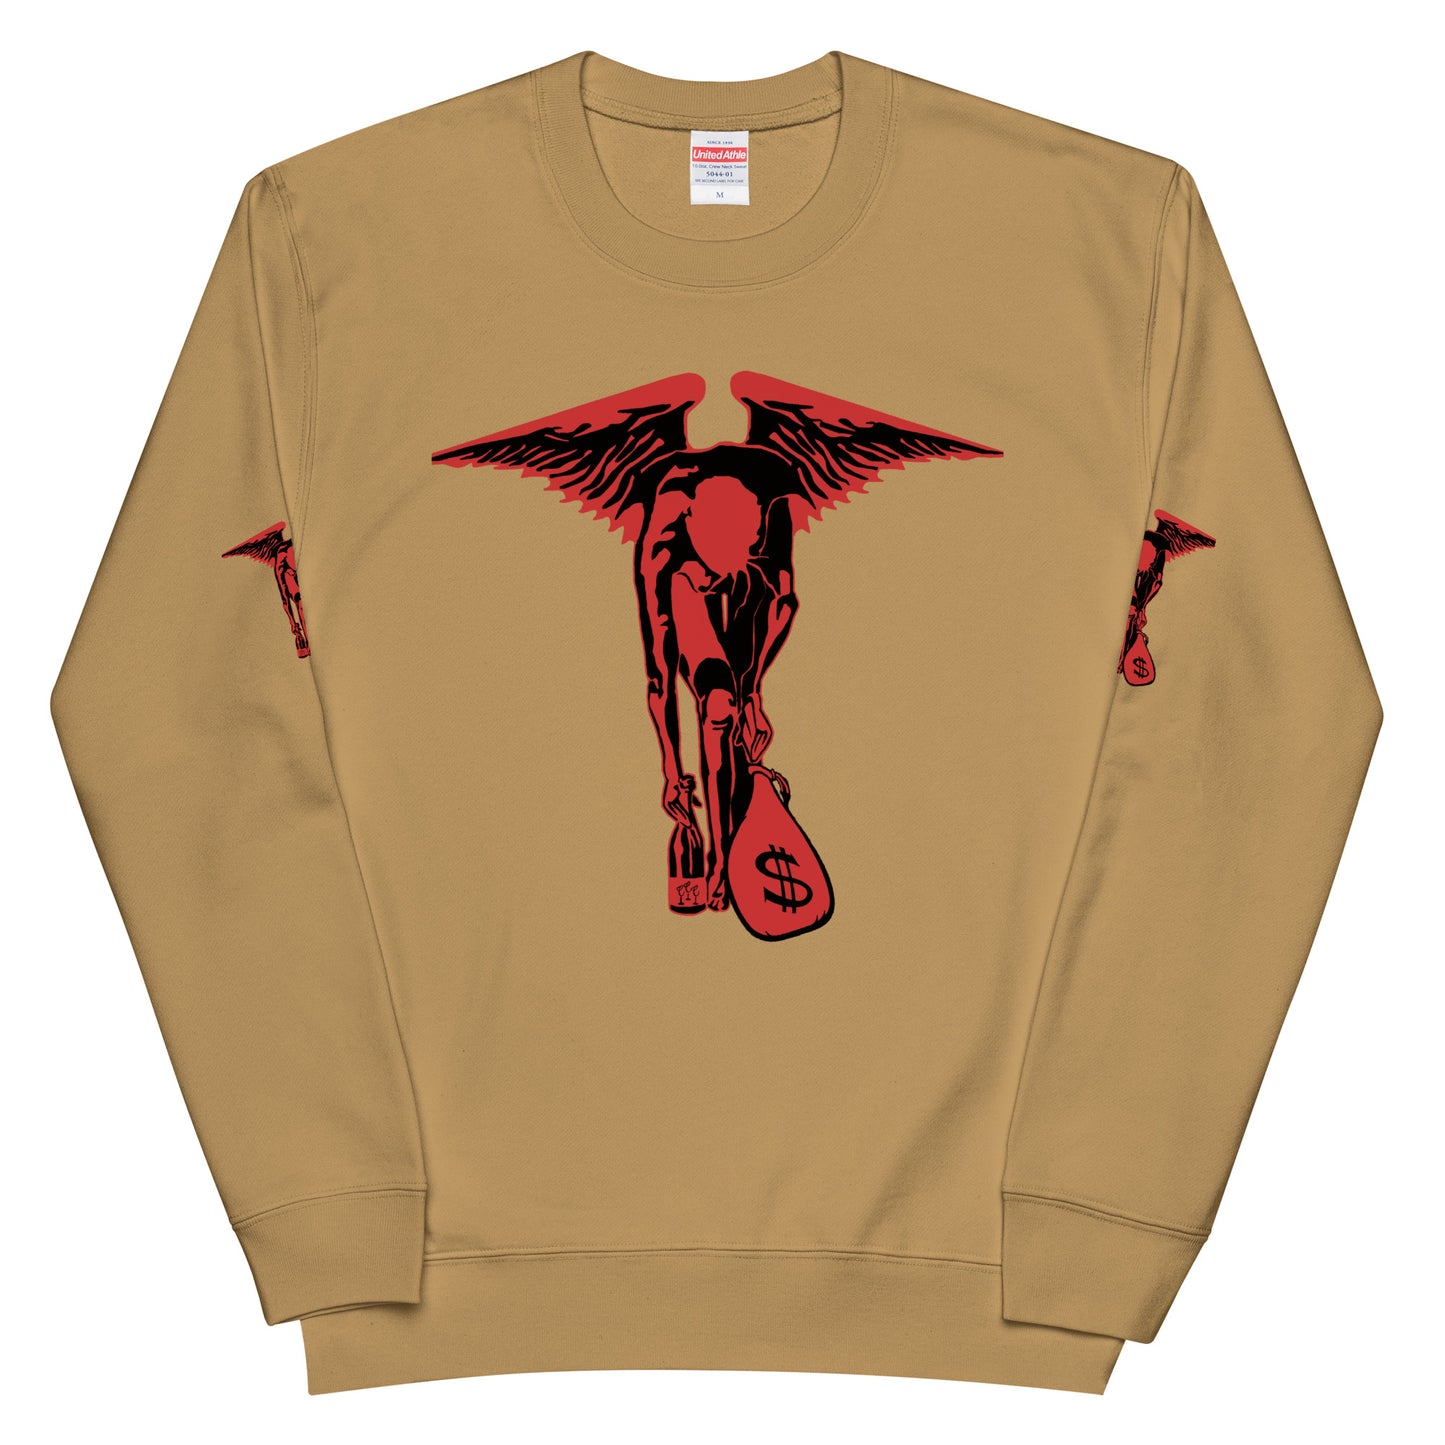 Red Angel Money Bag - Unisex french terry sweatshirt 100% Cotton